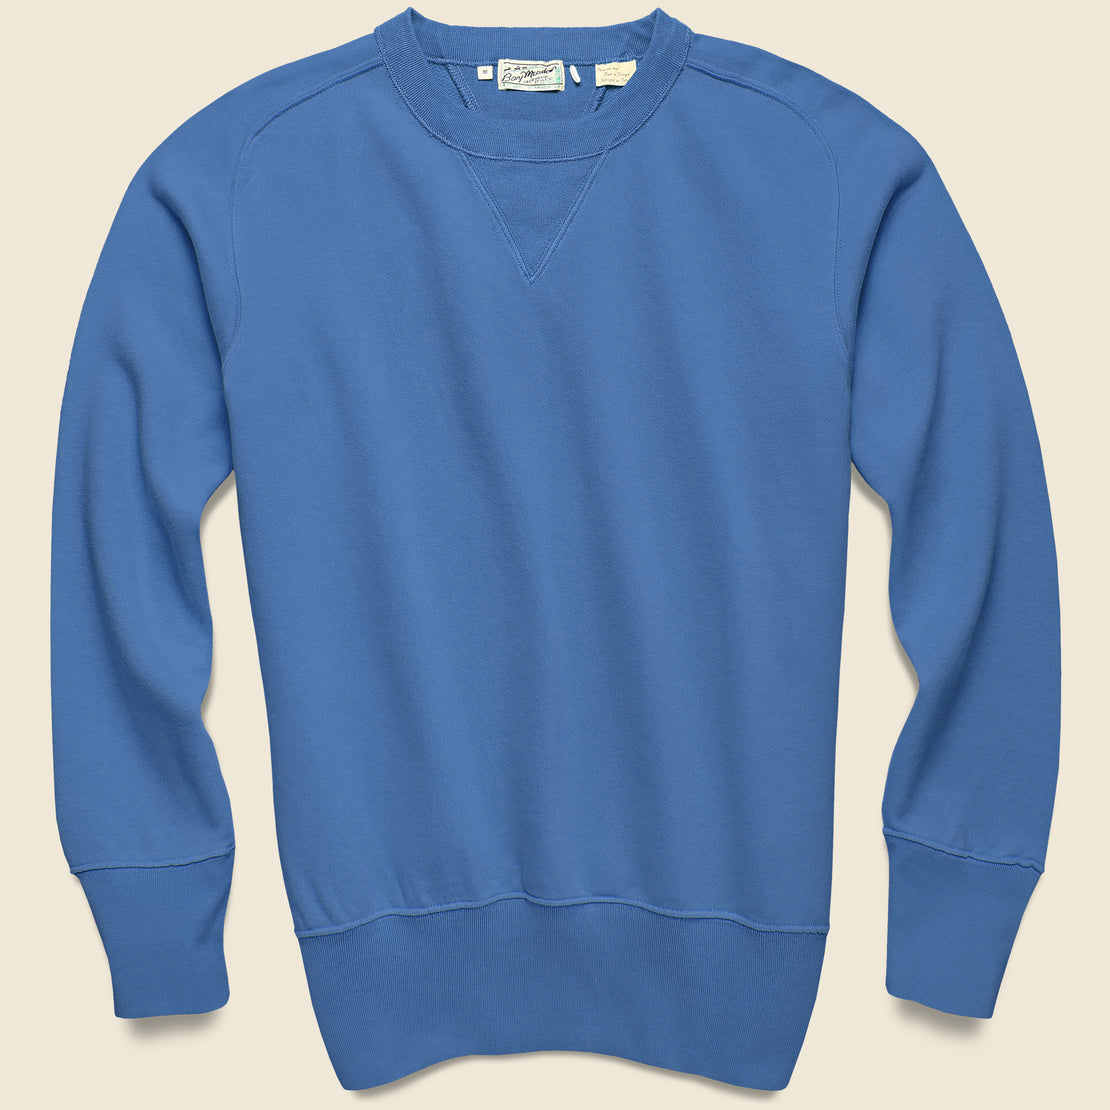 Levis Vintage Clothing Bay Meadows Sweatshirt - Dark Blue